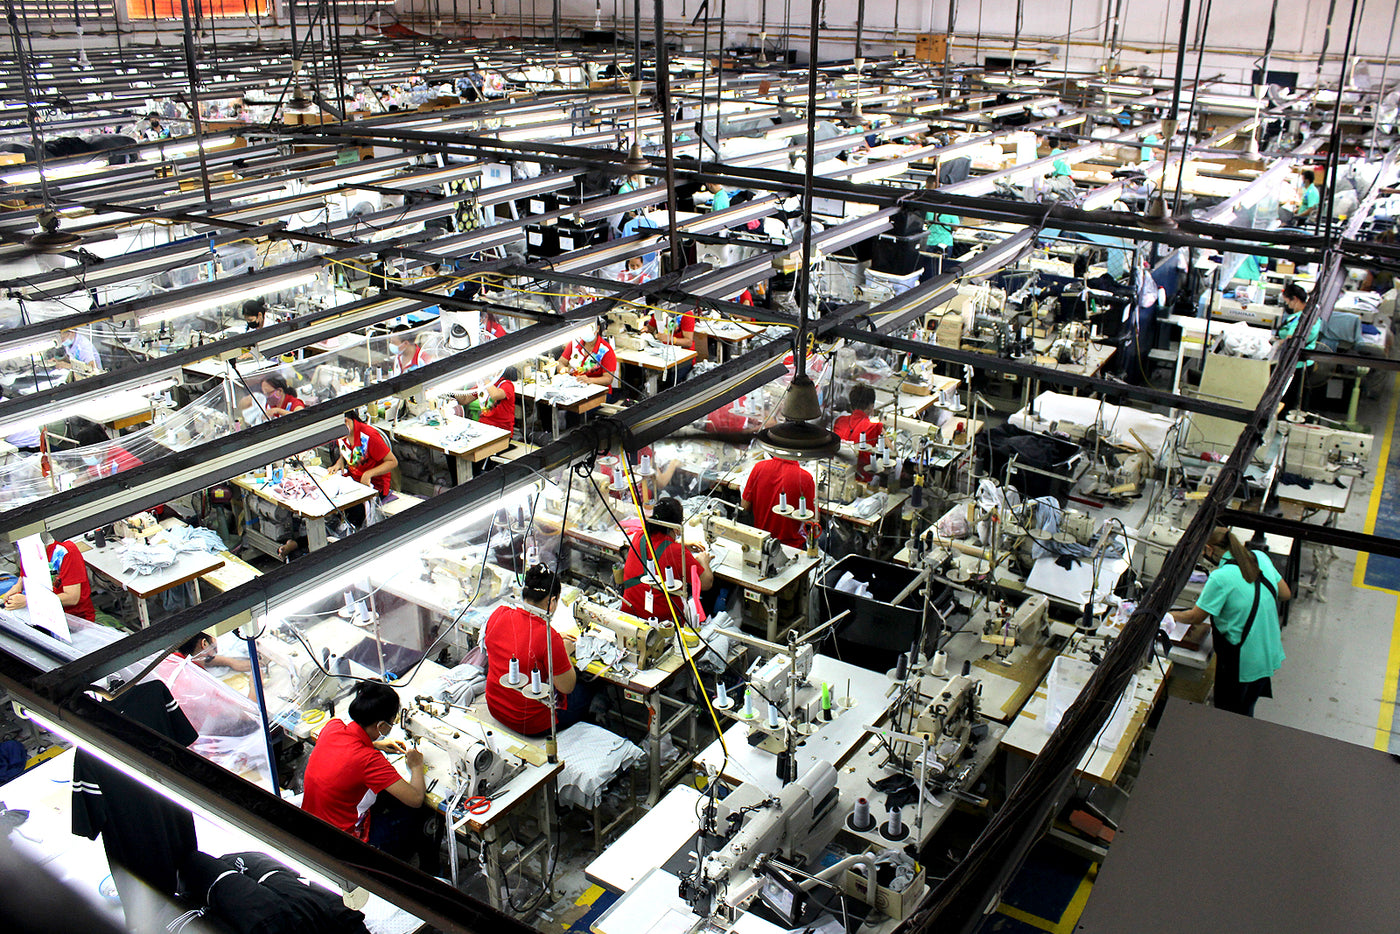 Garment manufacturing